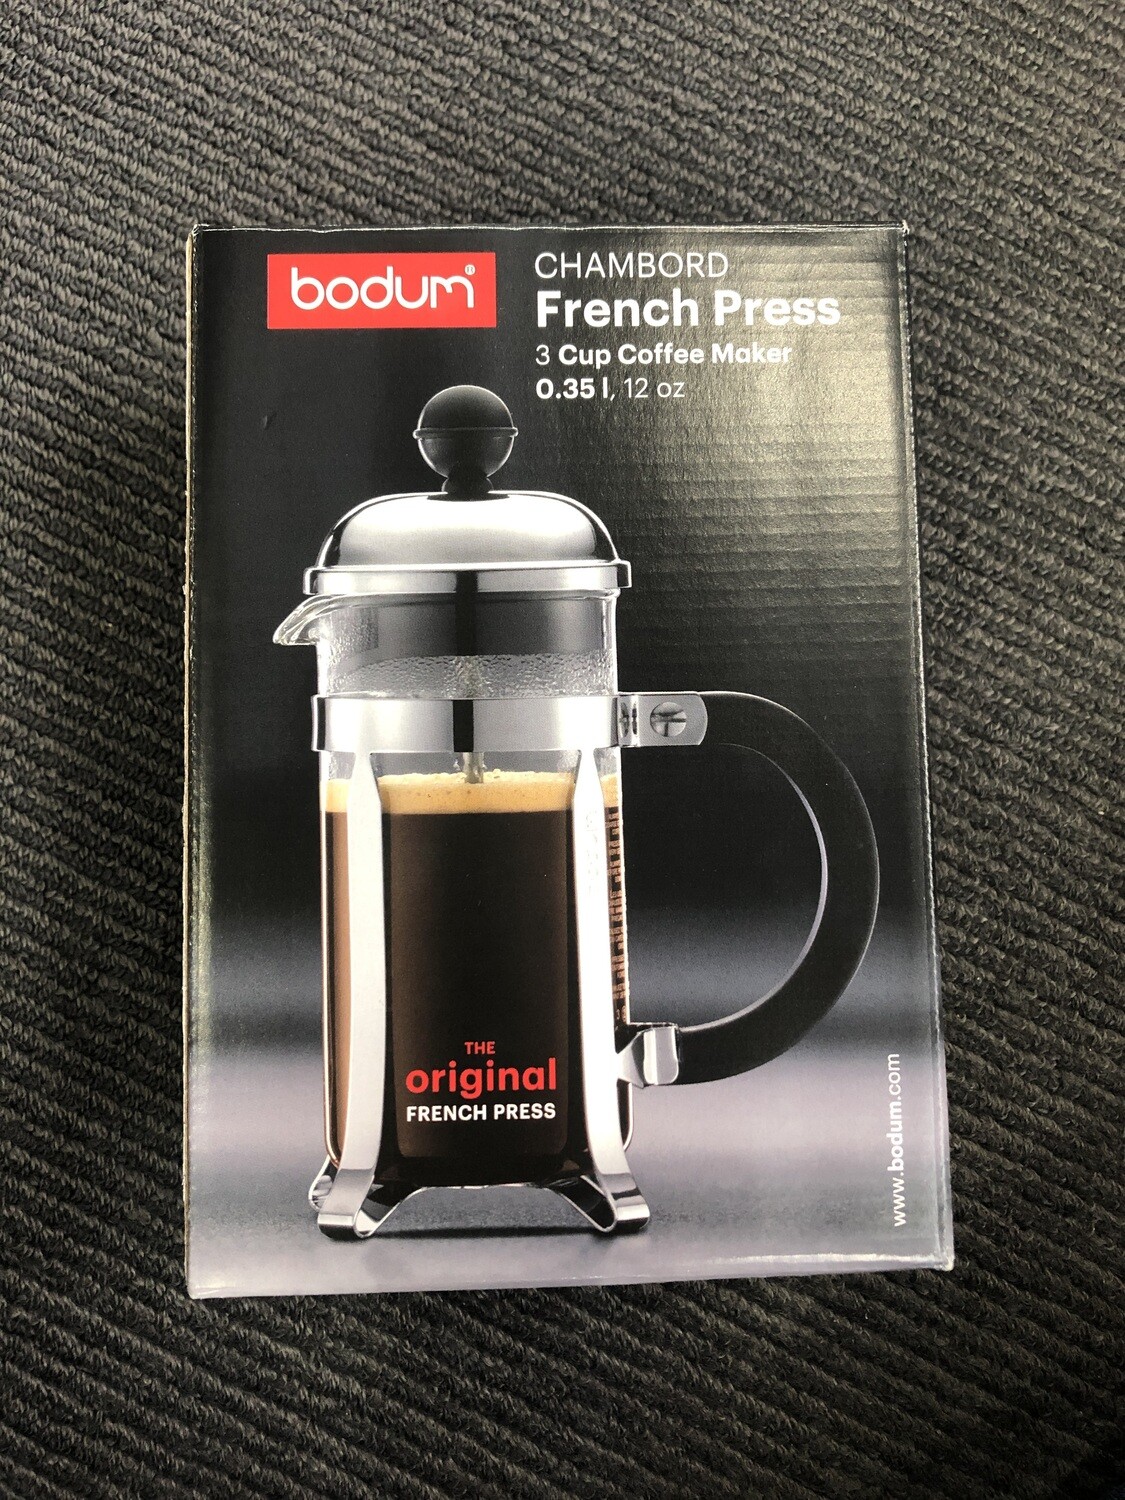 BODUM - Chambord French Press 
3 Cup Coffee Maker